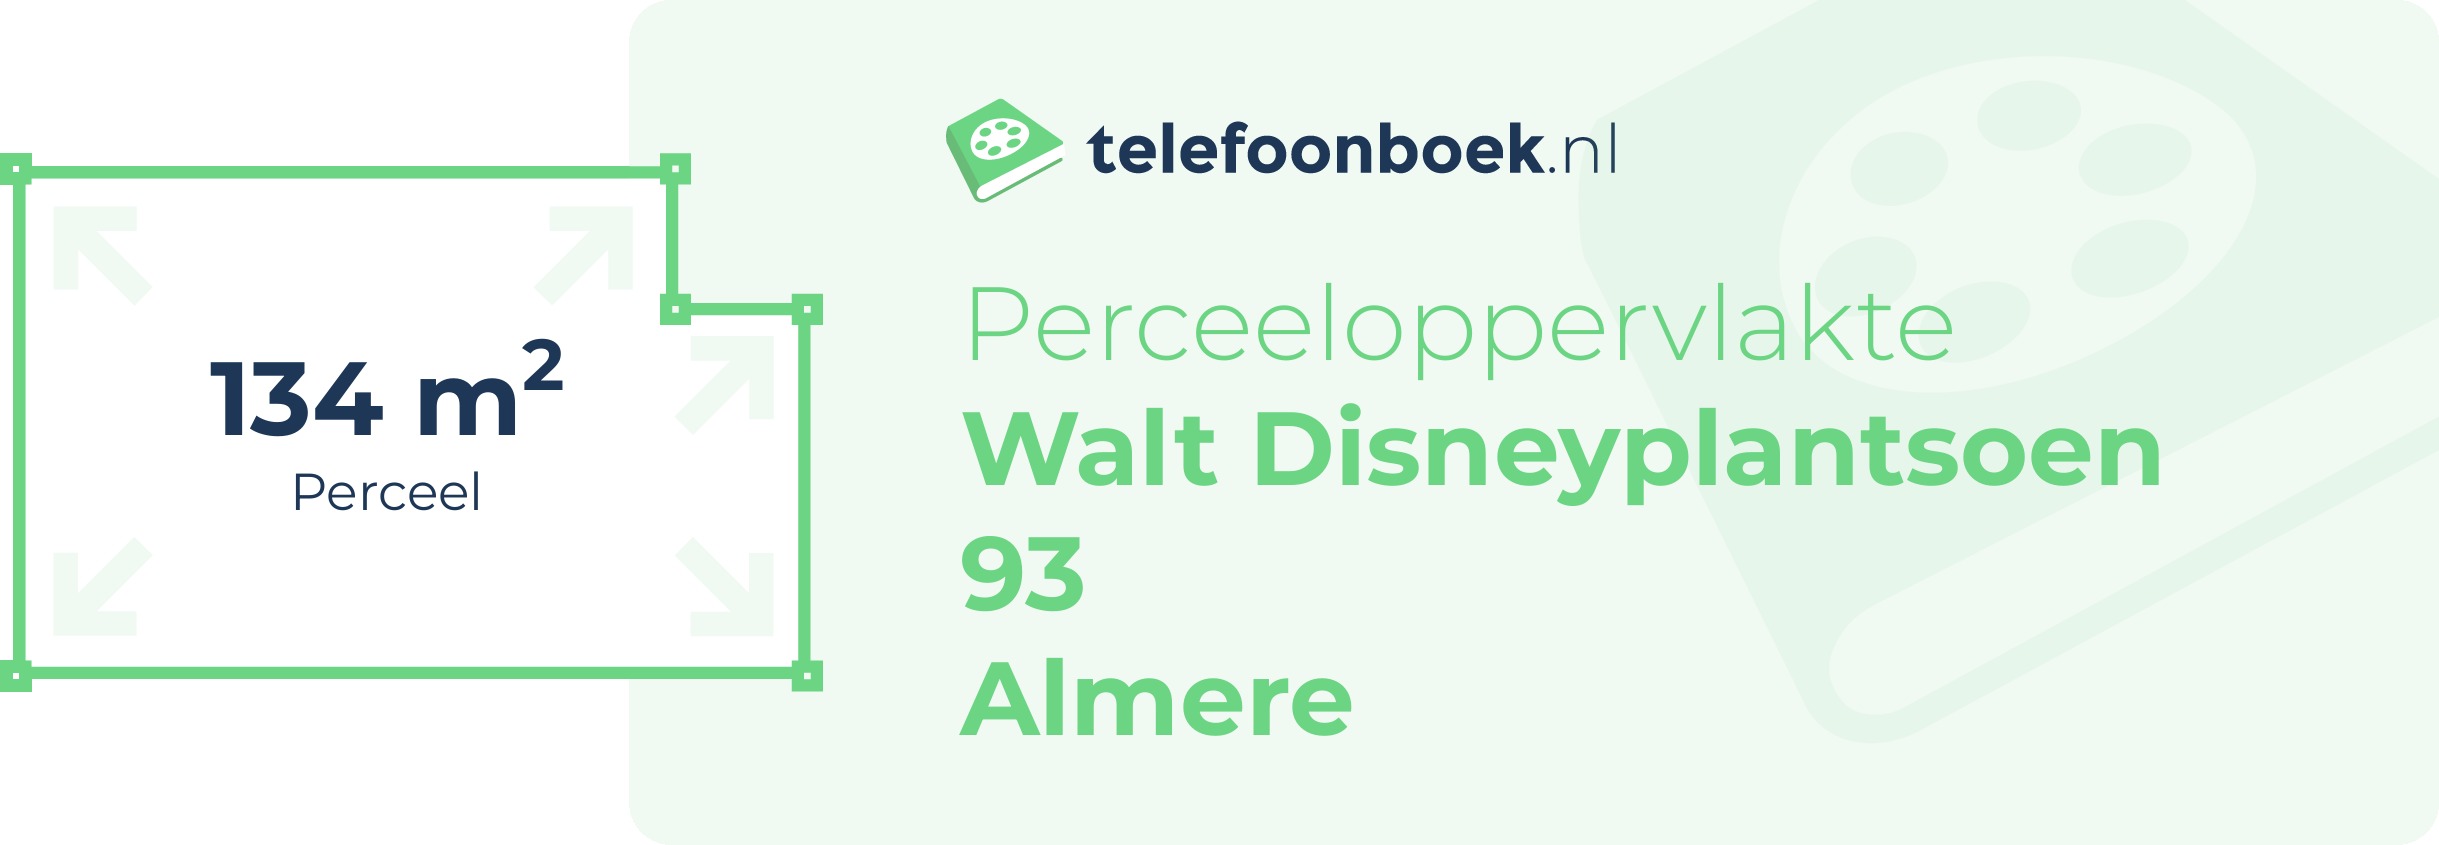 Perceeloppervlakte Walt Disneyplantsoen 93 Almere